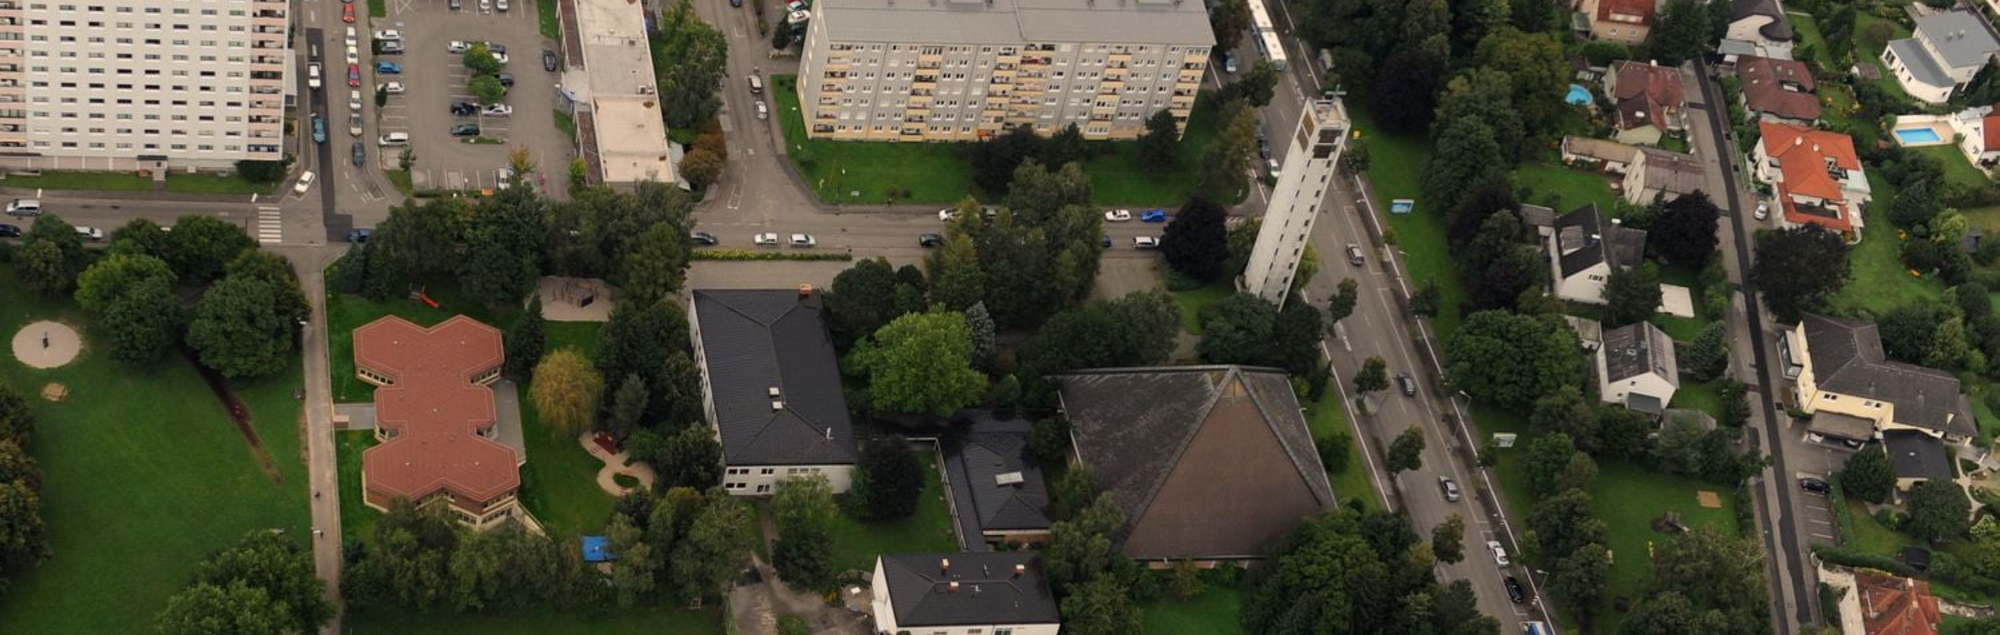 Luftaufnahme Pfarre Wels-St. Stephan